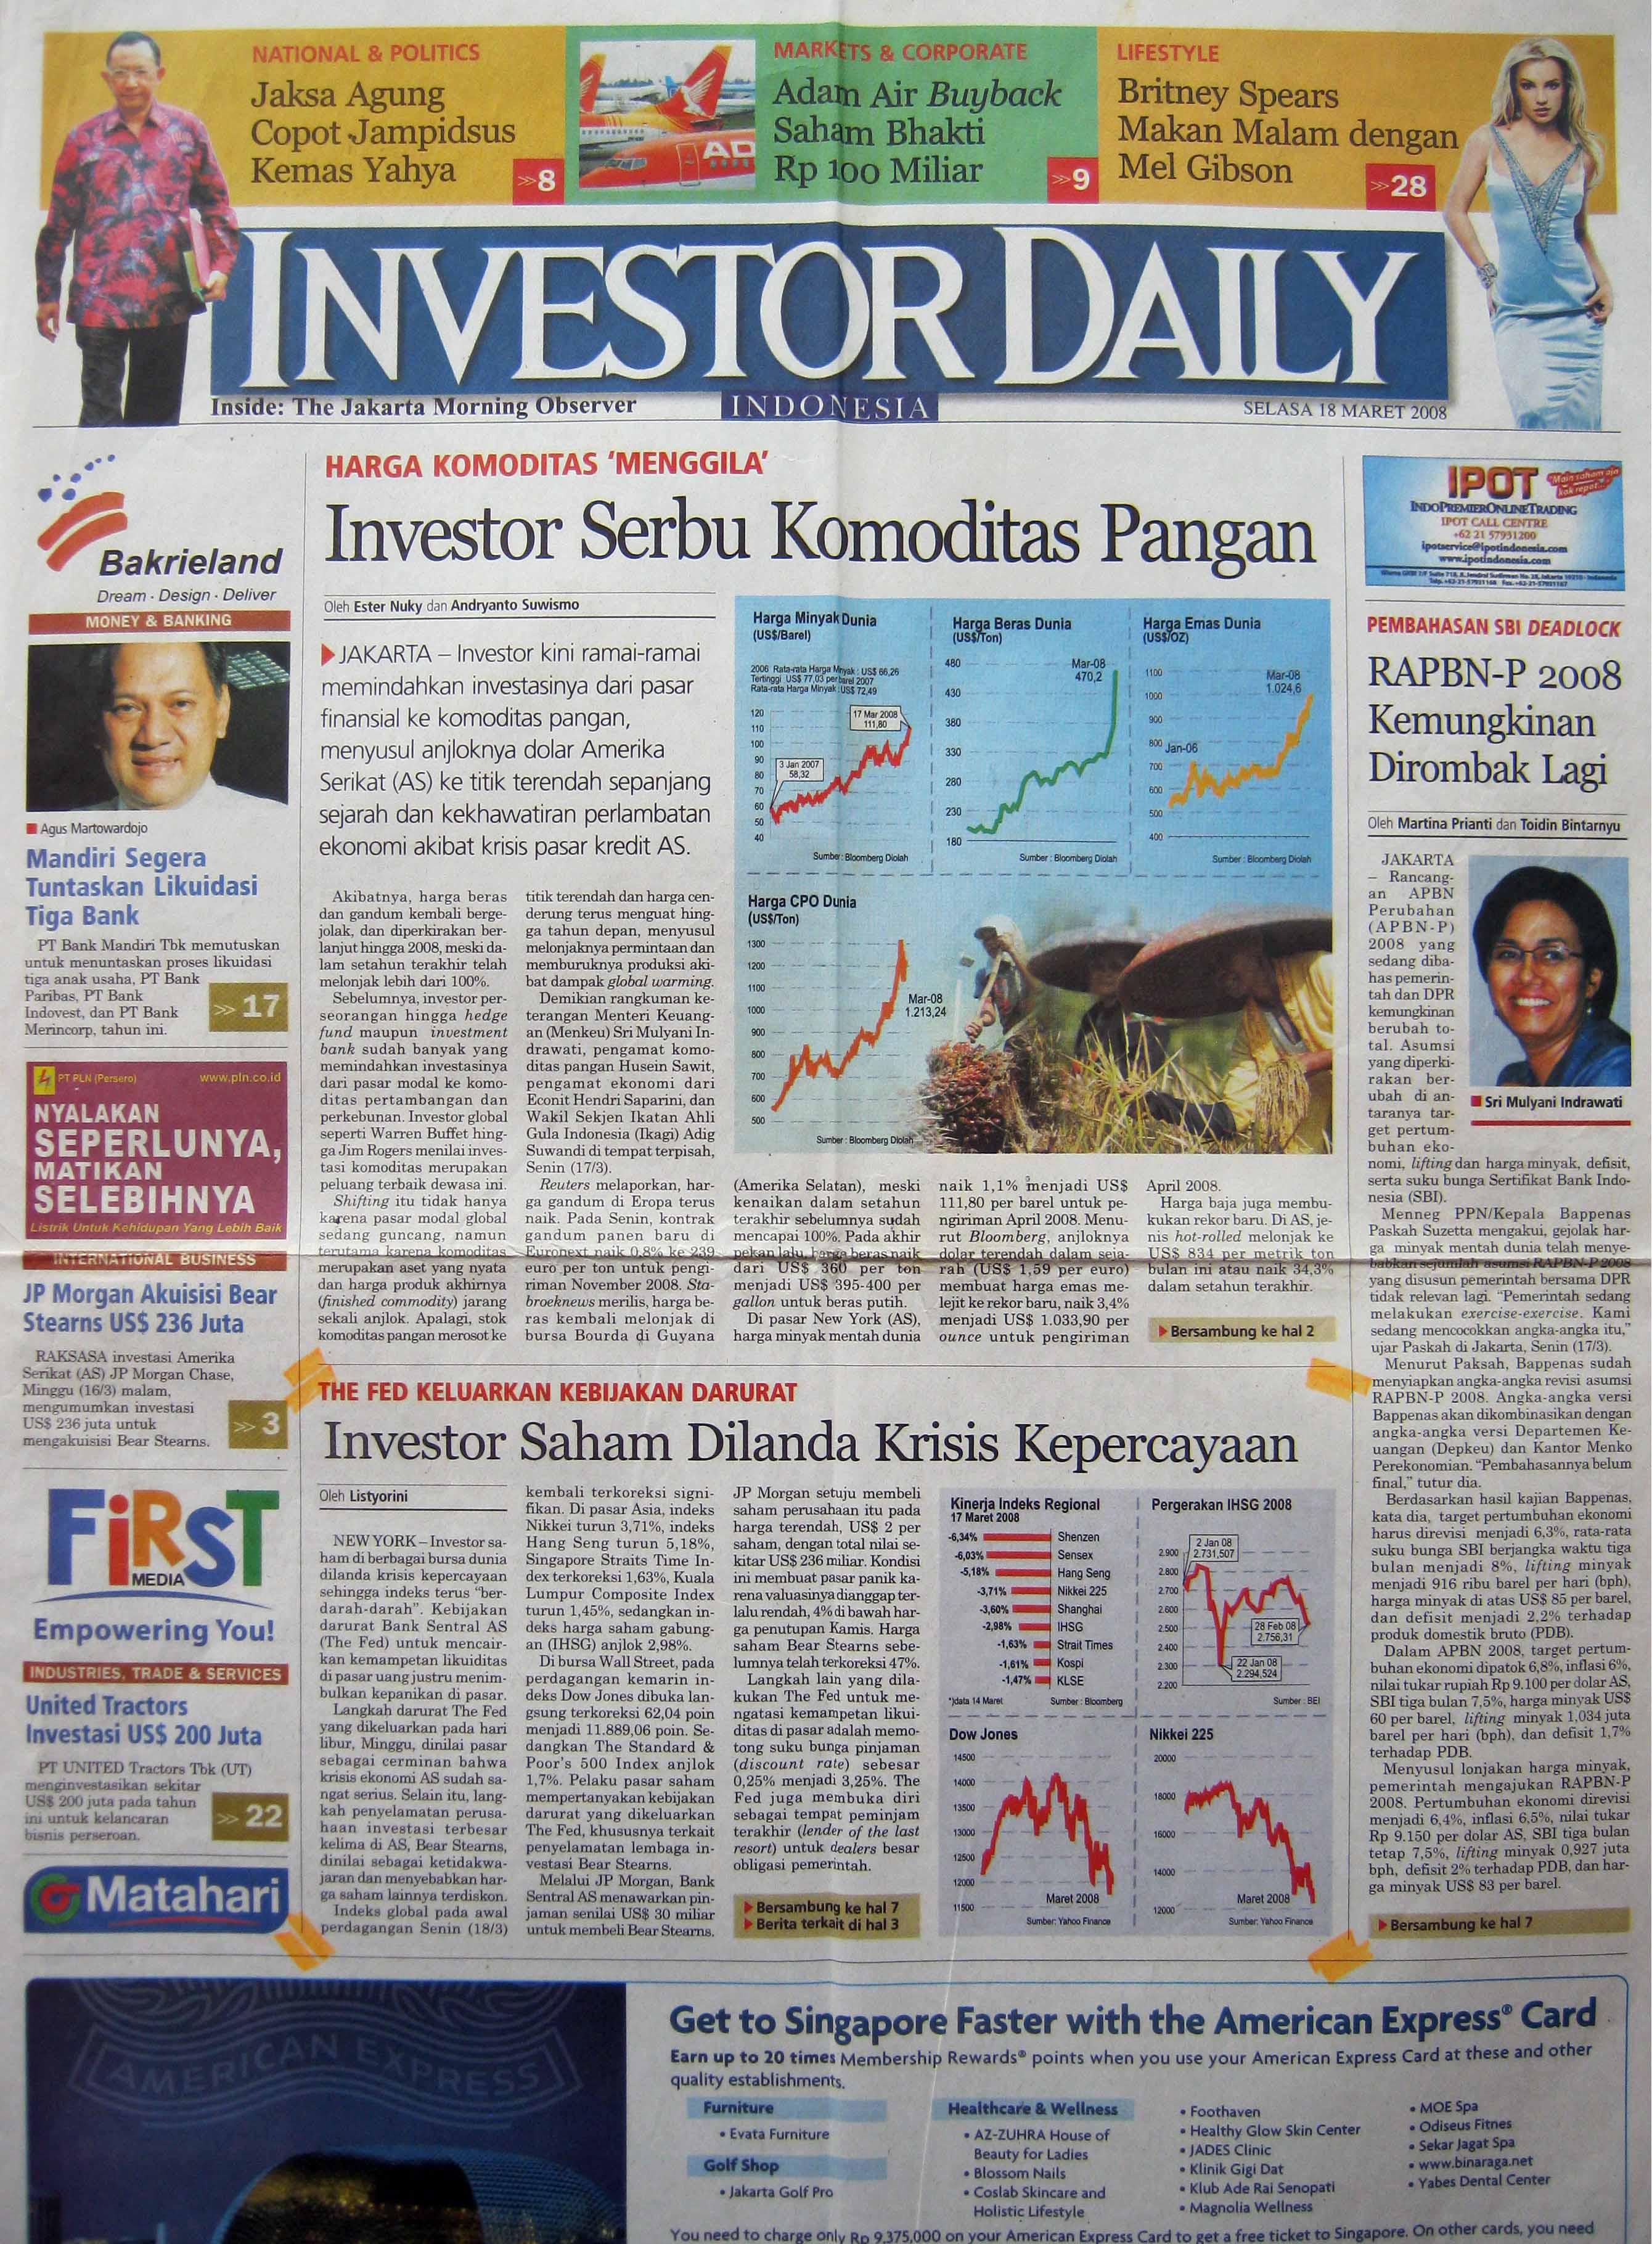 21. 18 Maret 2008 - Investor Saham Dilanda Krisis  Kepercayaan